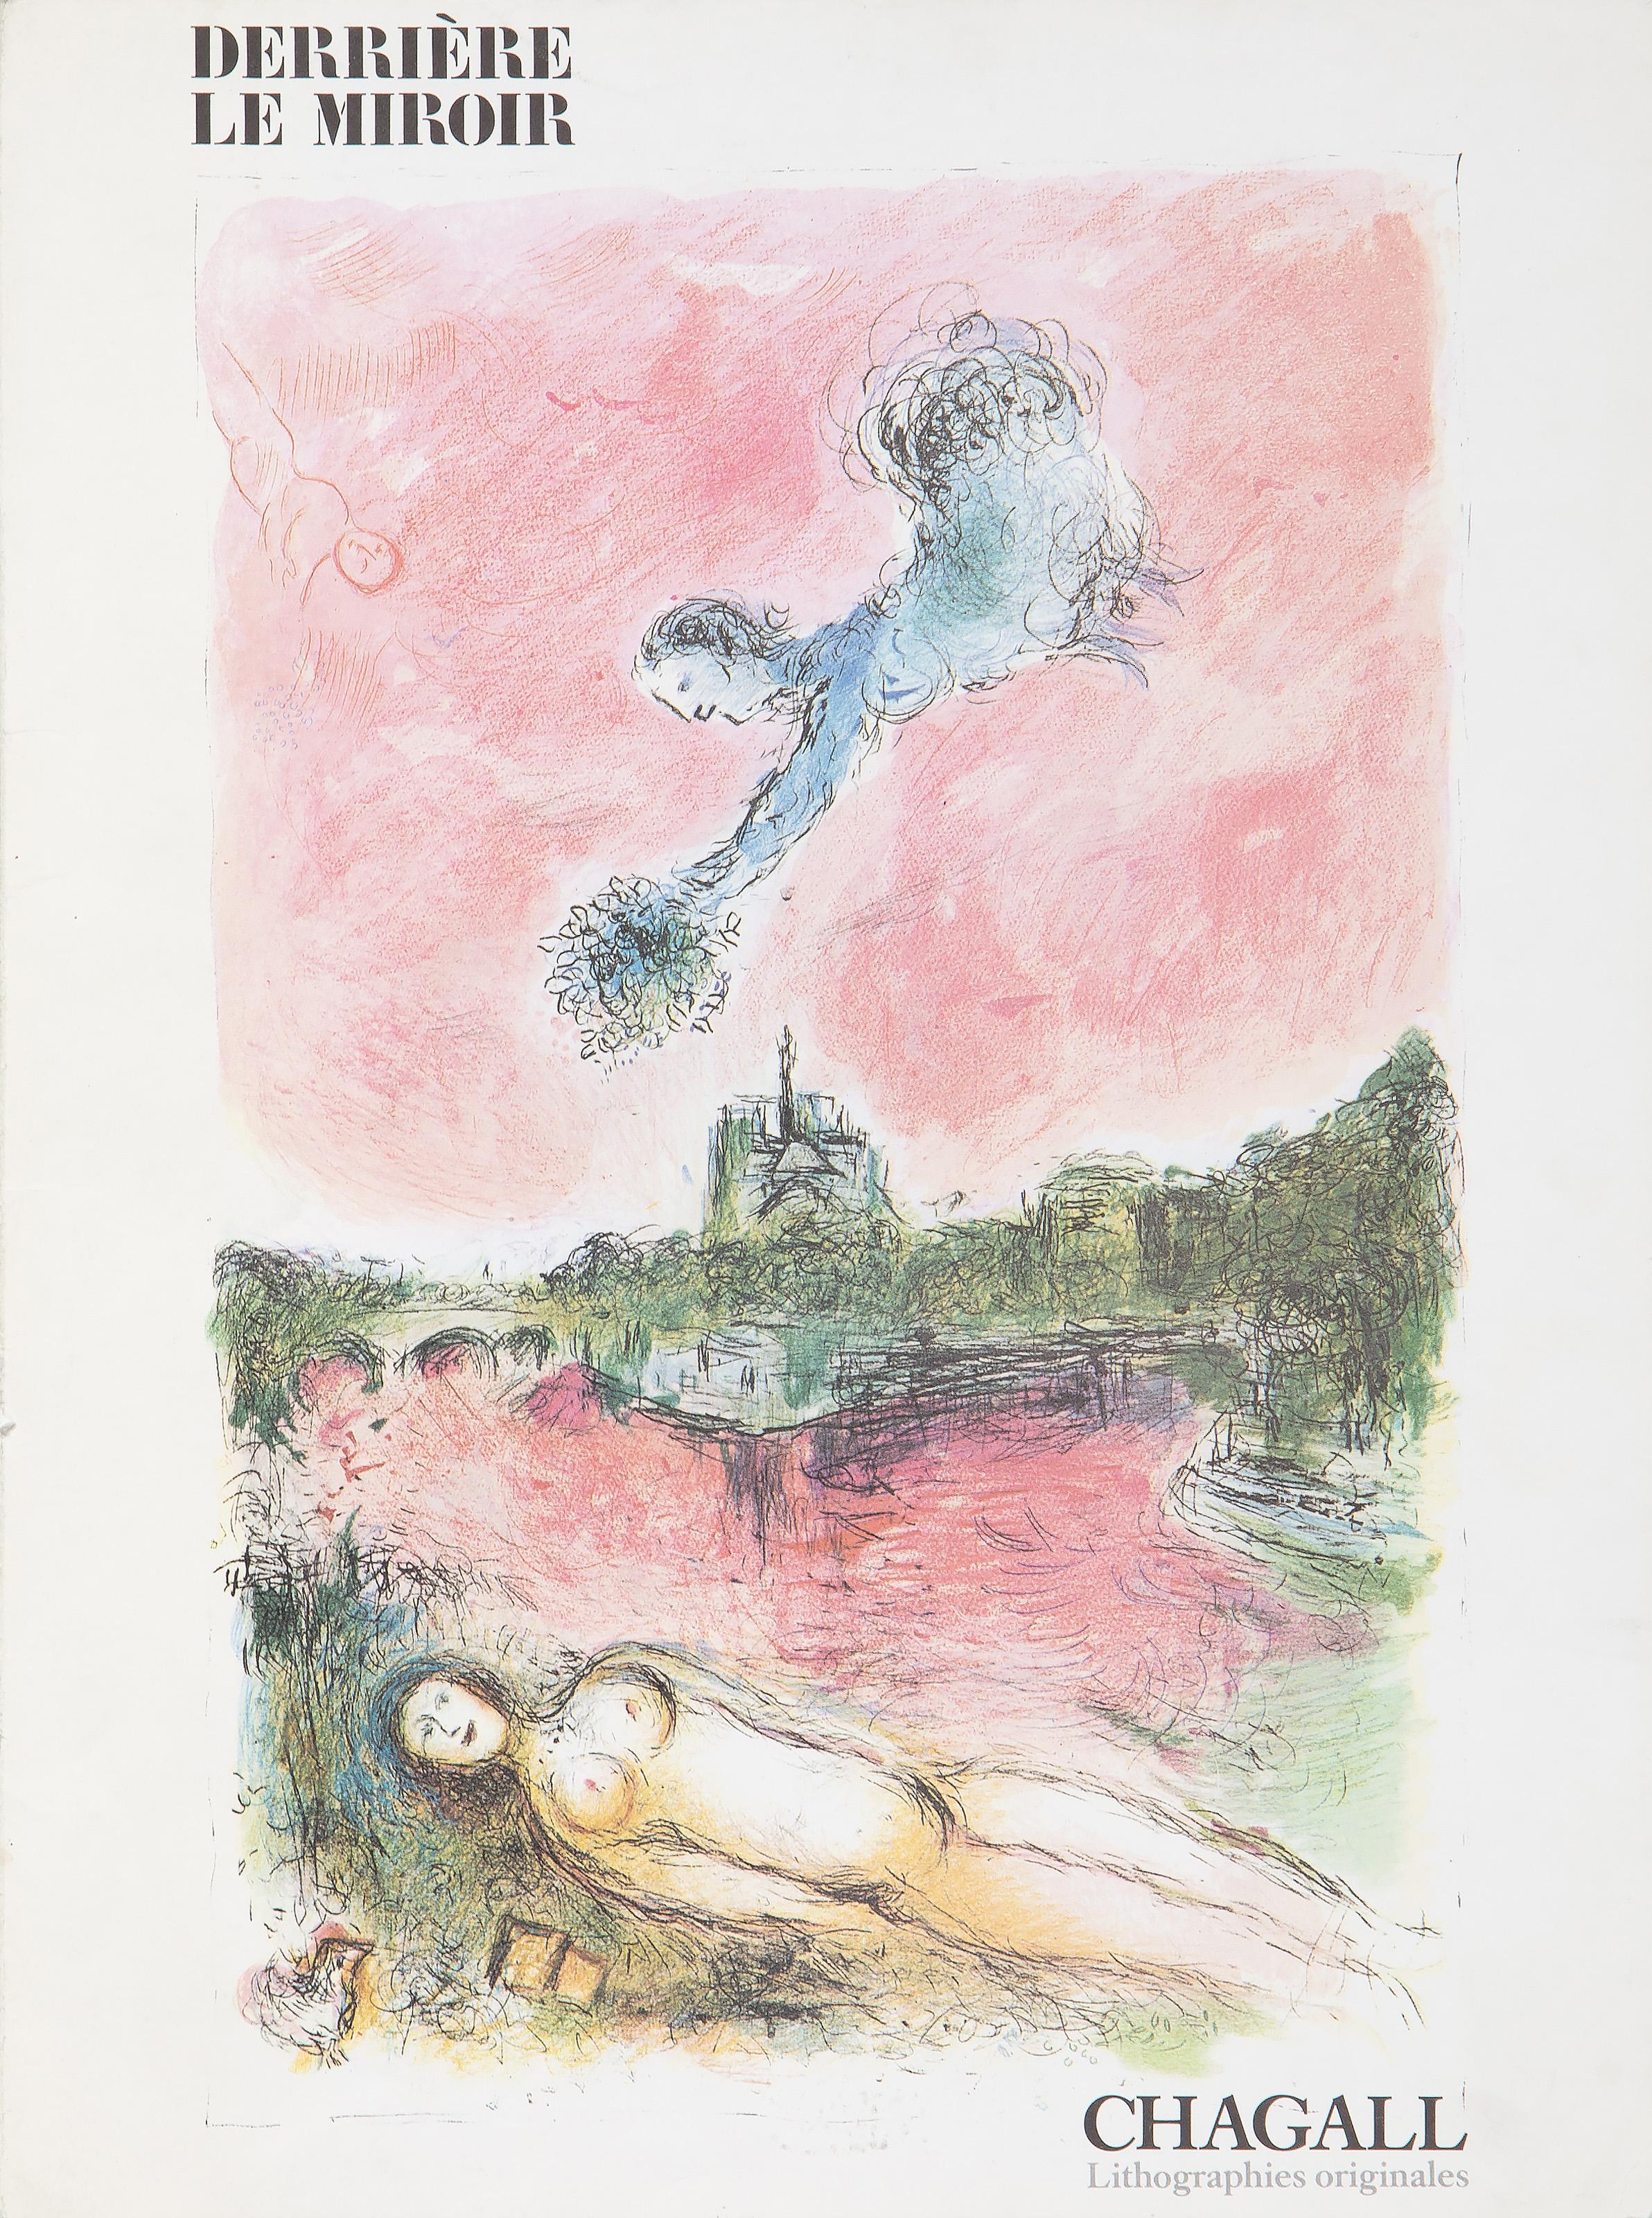 Marc Chagall, Russian (1887 - 1985) -  Derriere Le Miroir No 246. Year: 1981, Medium: Lithograph, Size: 15 x 11.25 in. (38.1 x 28.58 cm), Printer: Galerie Maeght, Paris, Publisher: Maeght Editions 